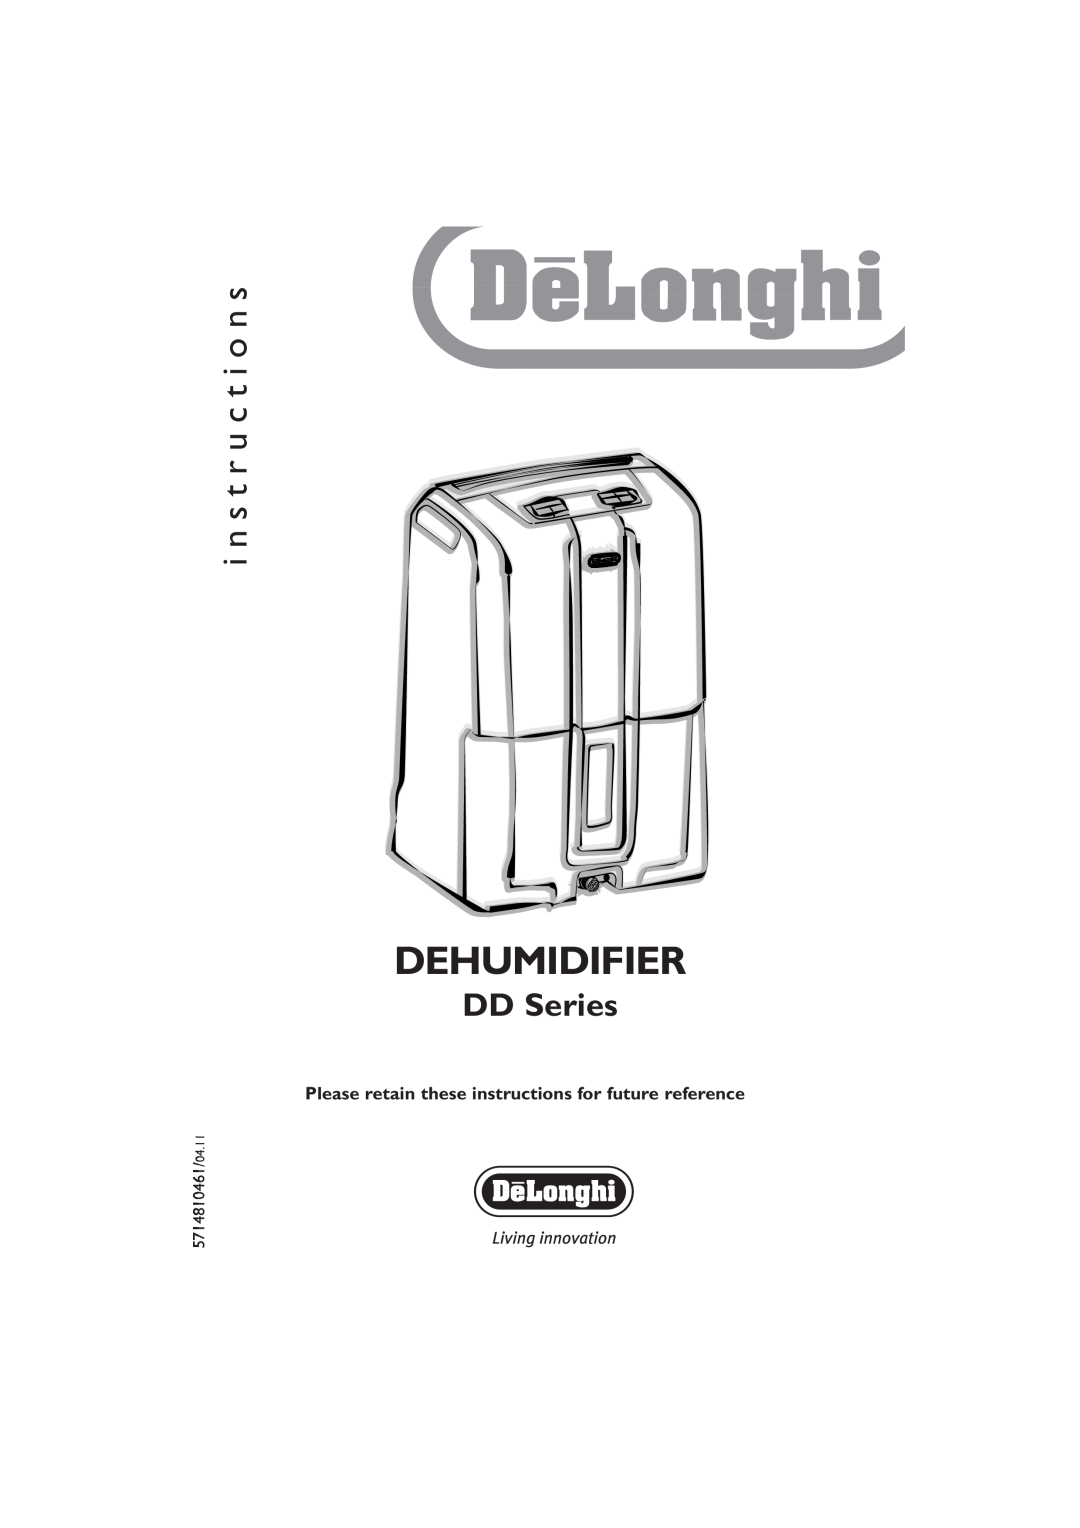 DeLonghi DD SERIES manual Dehumidifier, i n s t r u c t i o n s, DD Series 